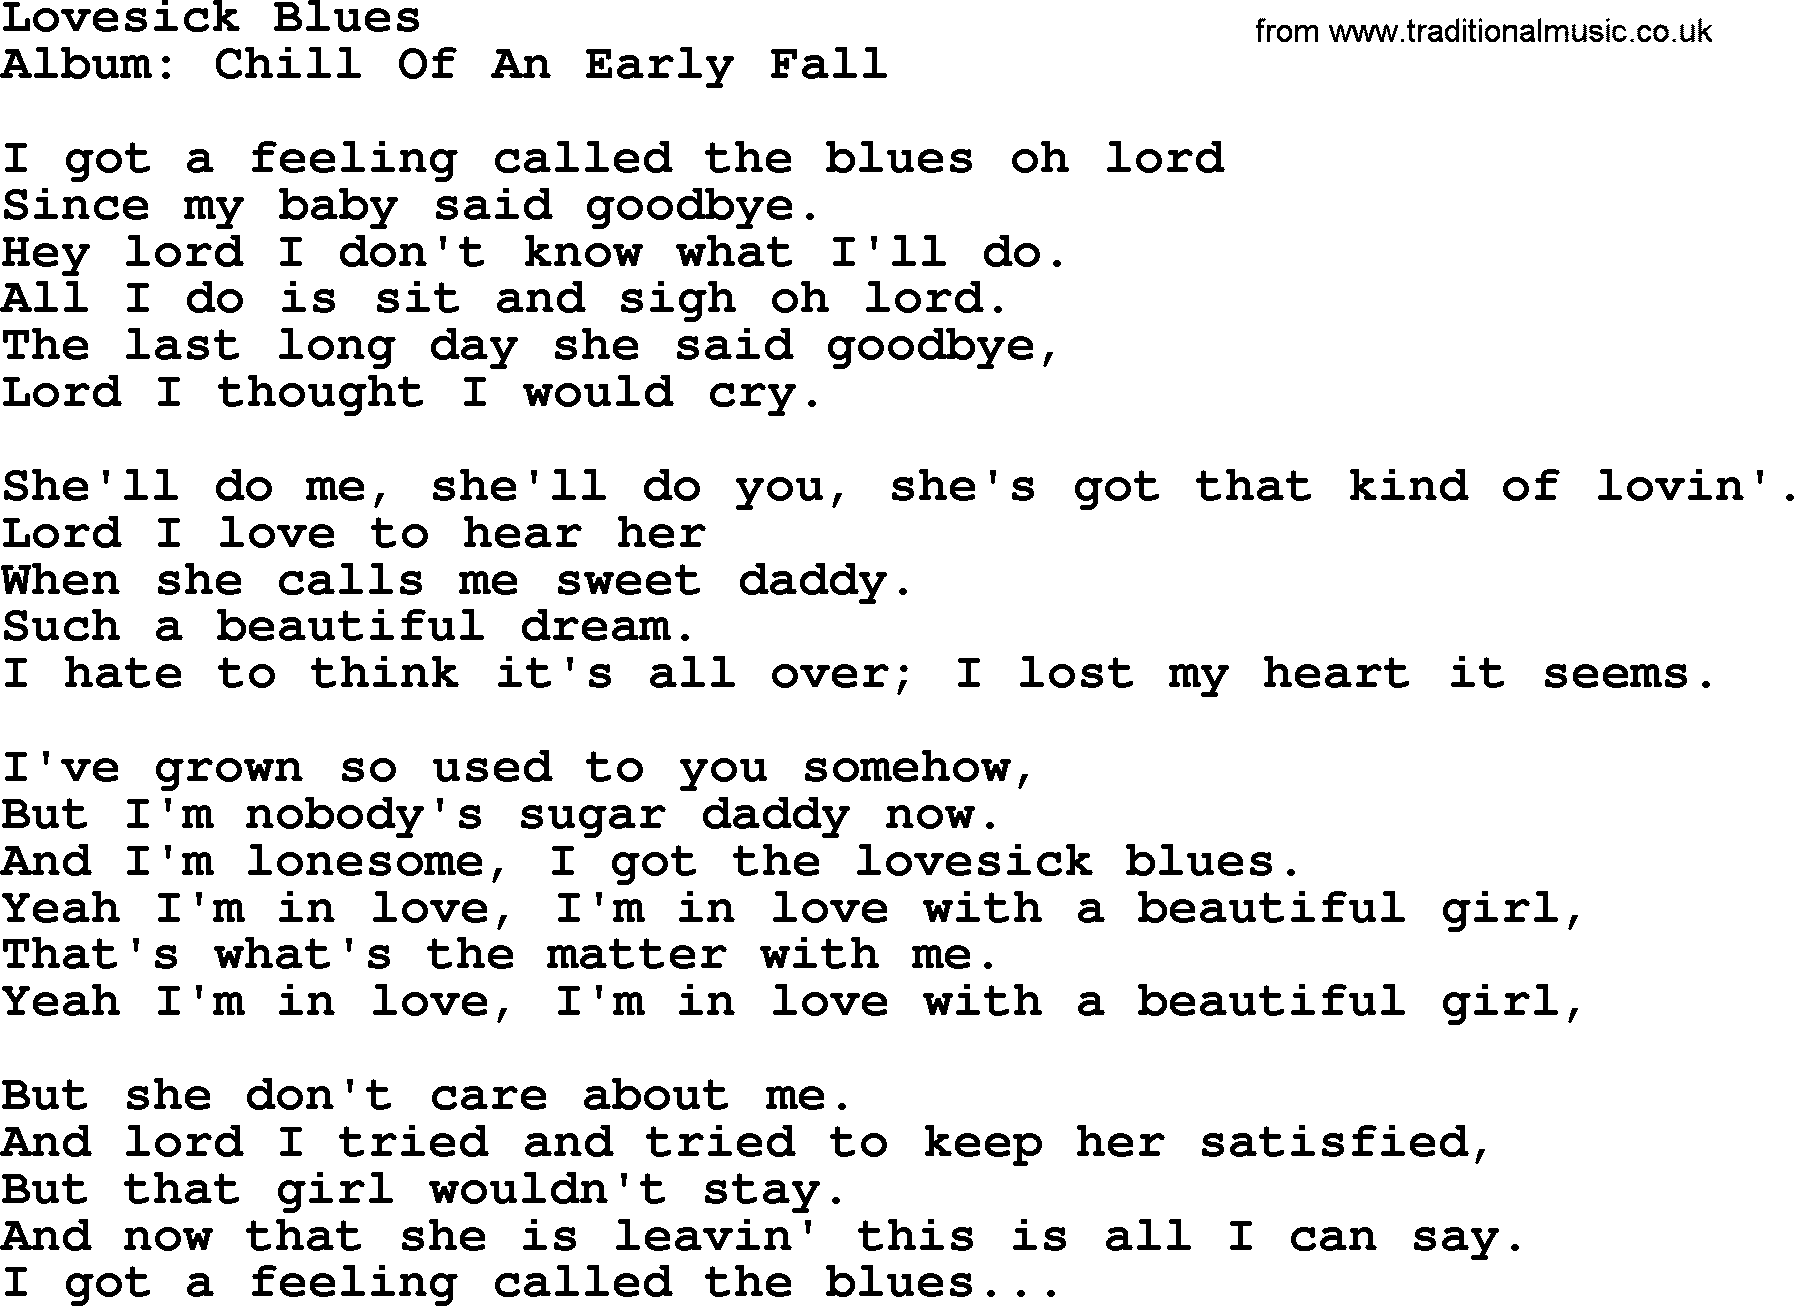 George Strait song: Lovesick Blues, lyrics